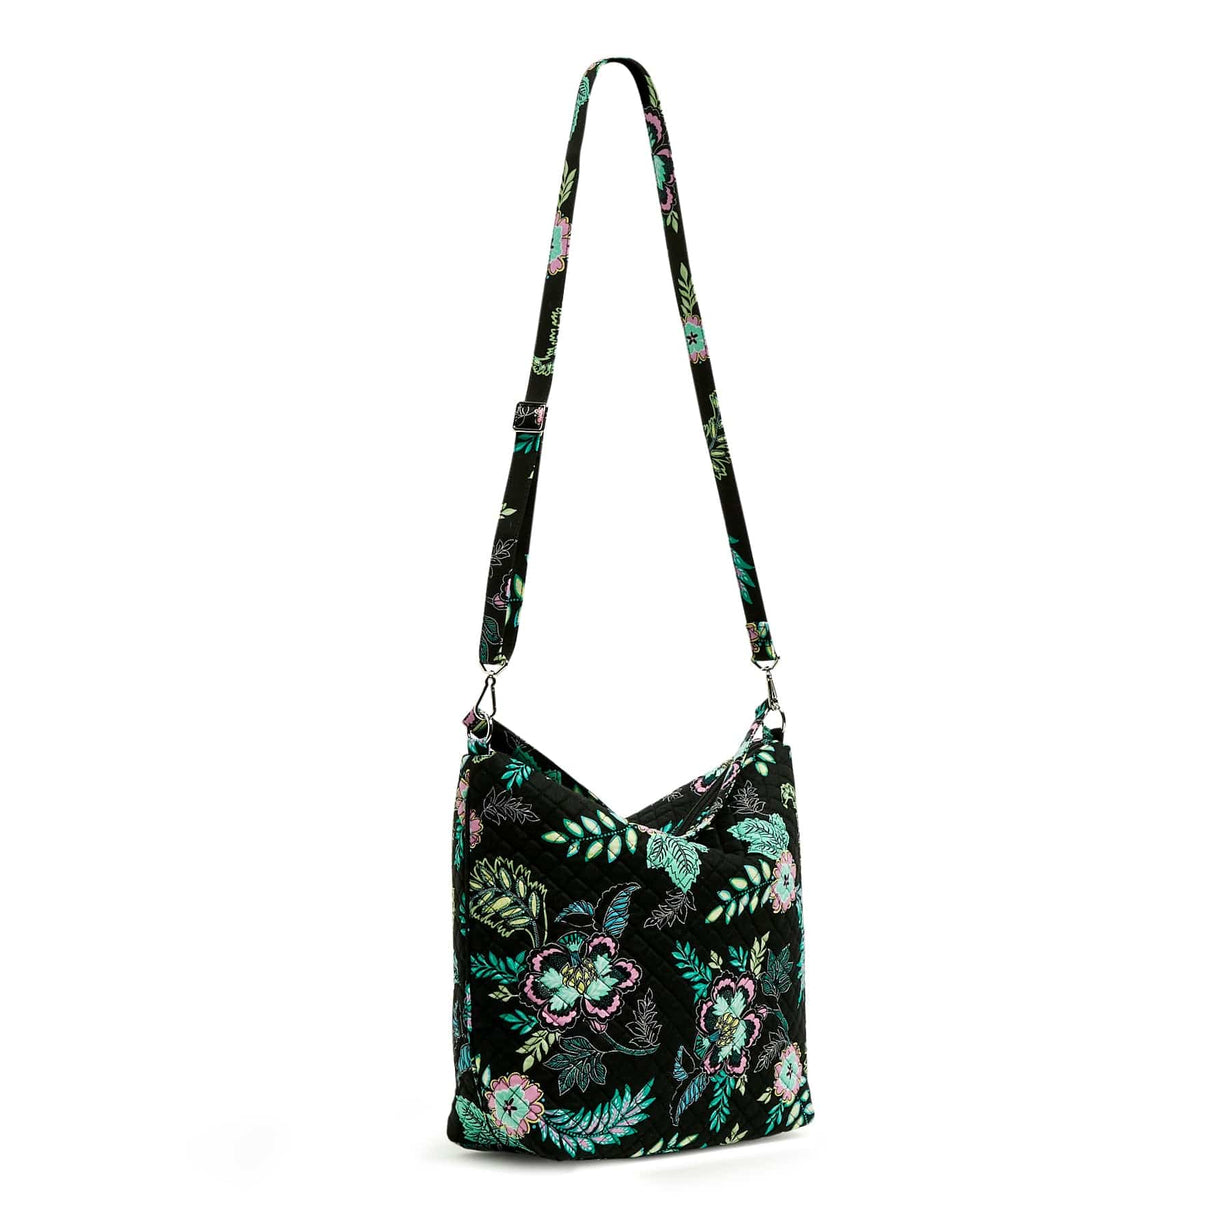 Buy Women's Canvas Bag Crossbody Bag Casual Hobo Bag Large Shoulder Bag  Shopping Bag Unisex, Black, Large at Amazon.in